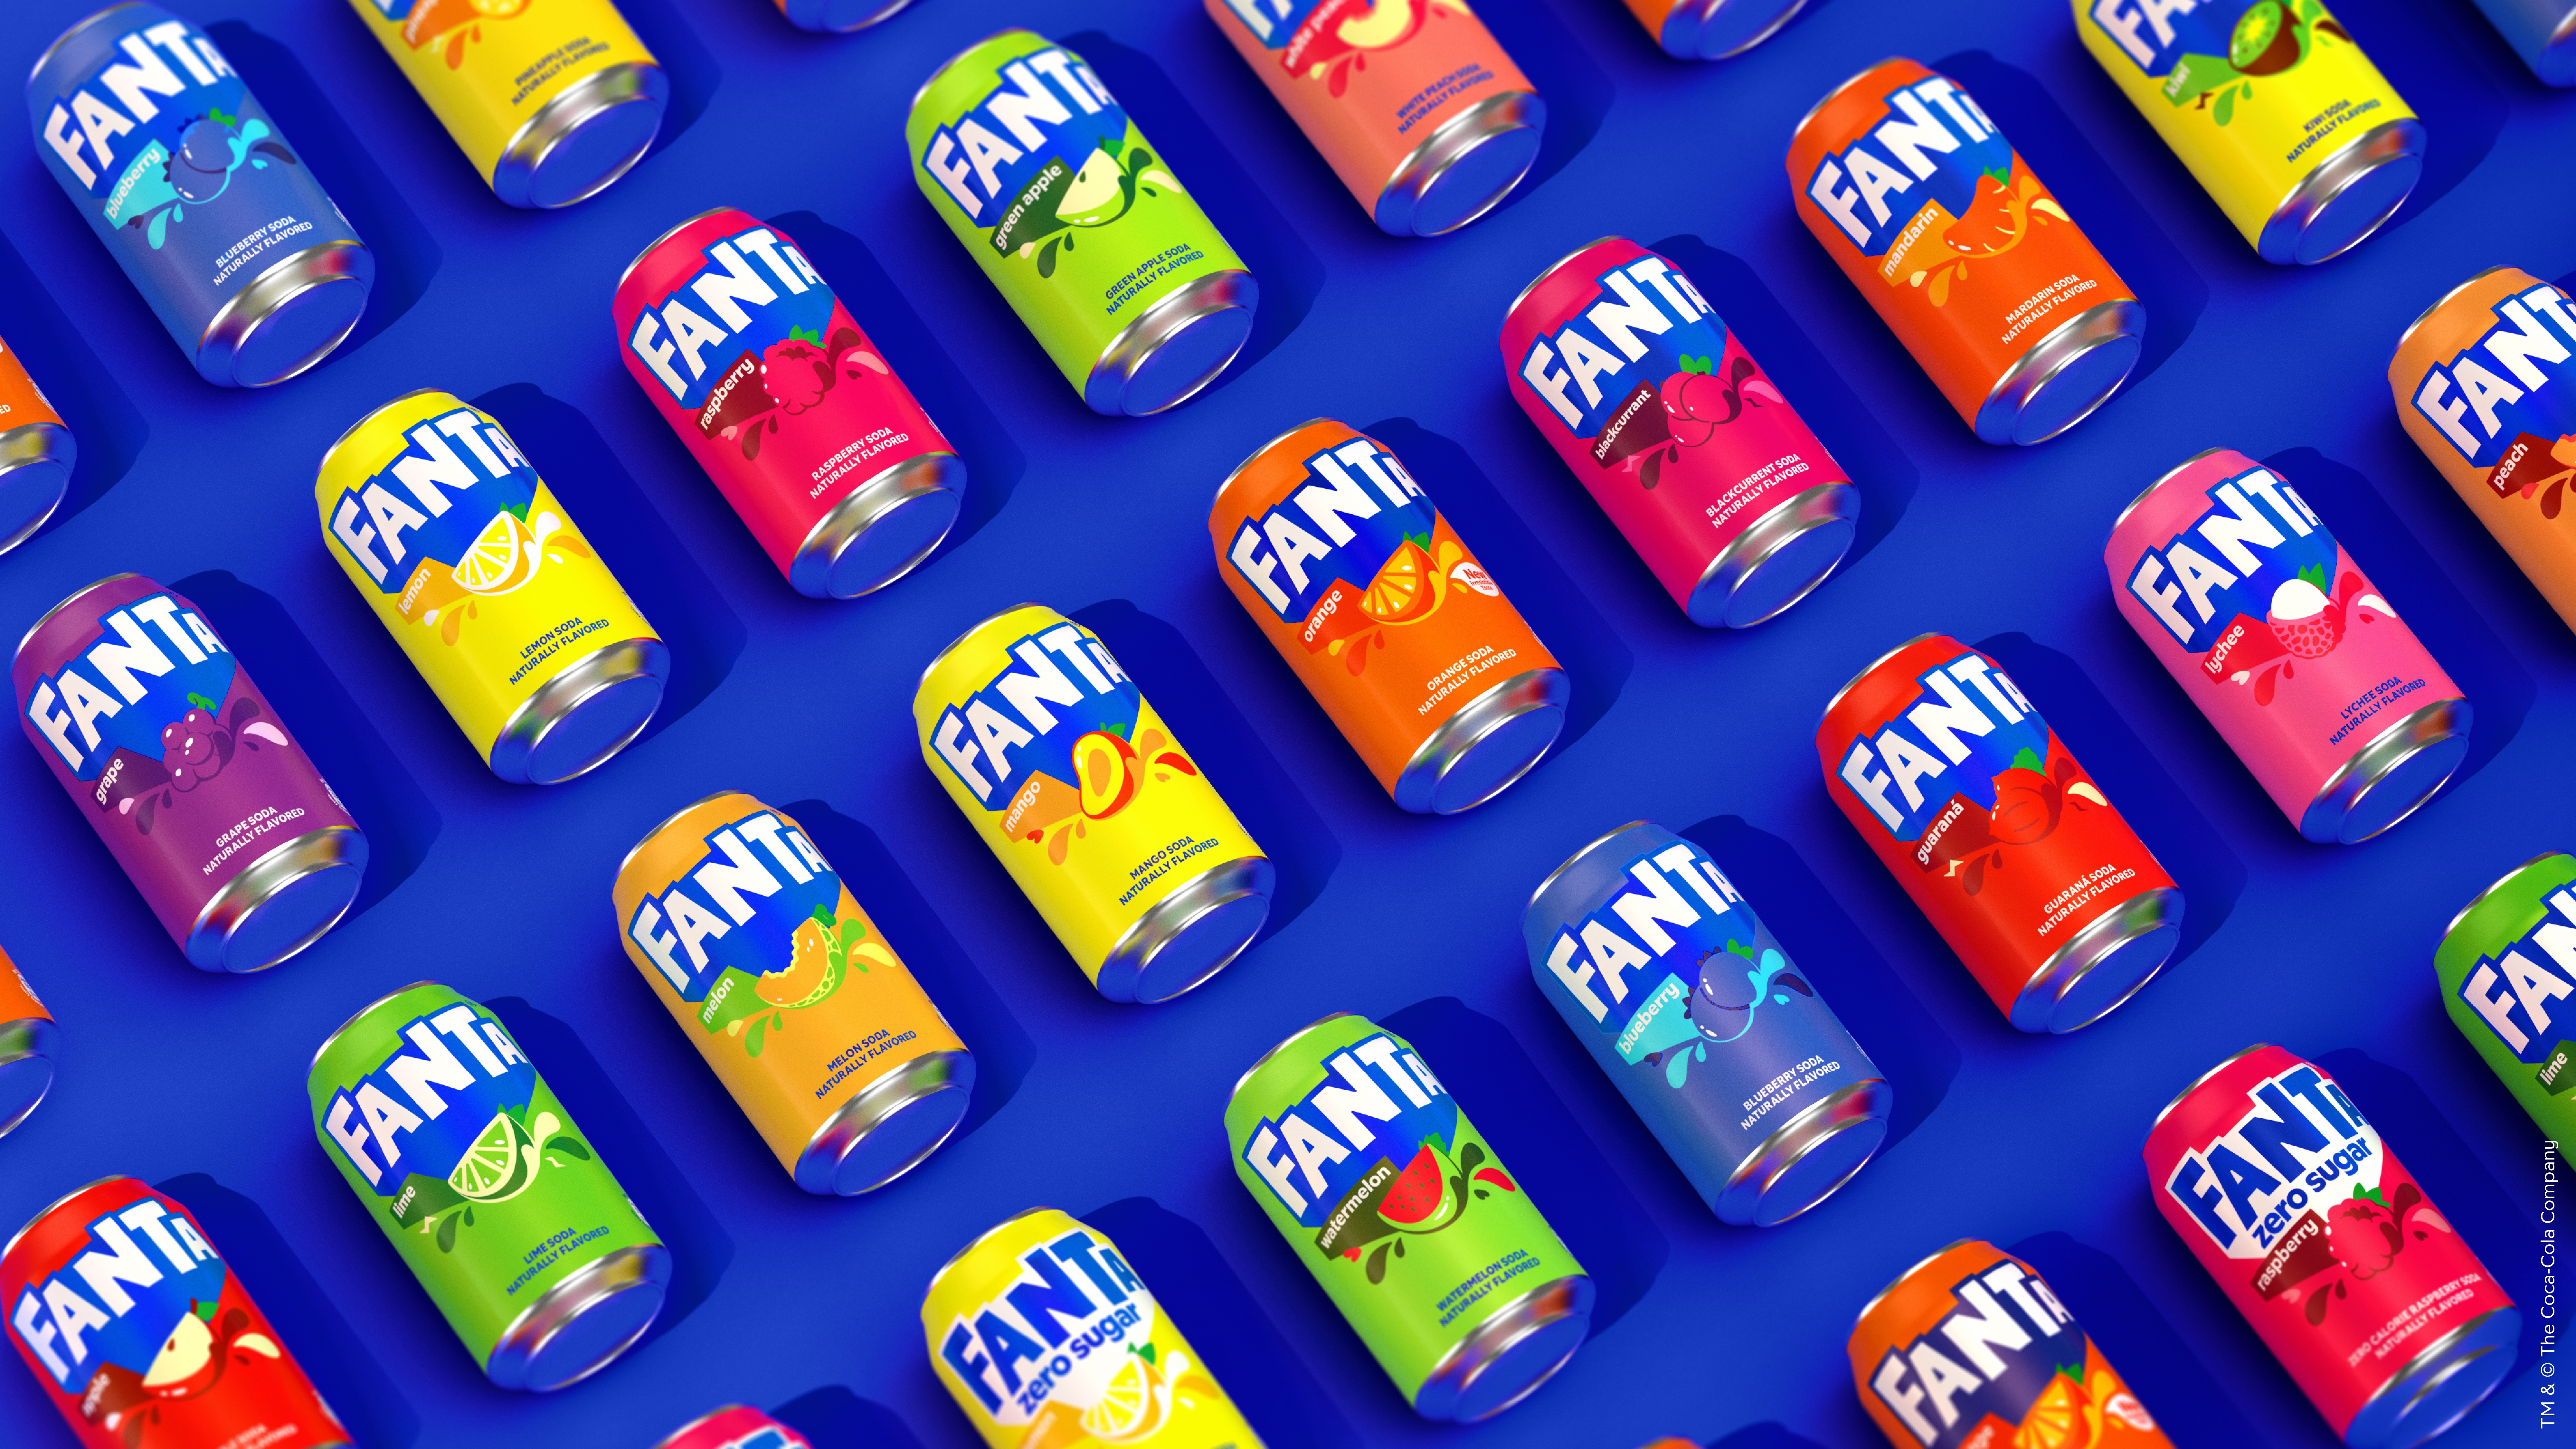 Marketing Brew: How Fanta made consumers ‘wanna’ again